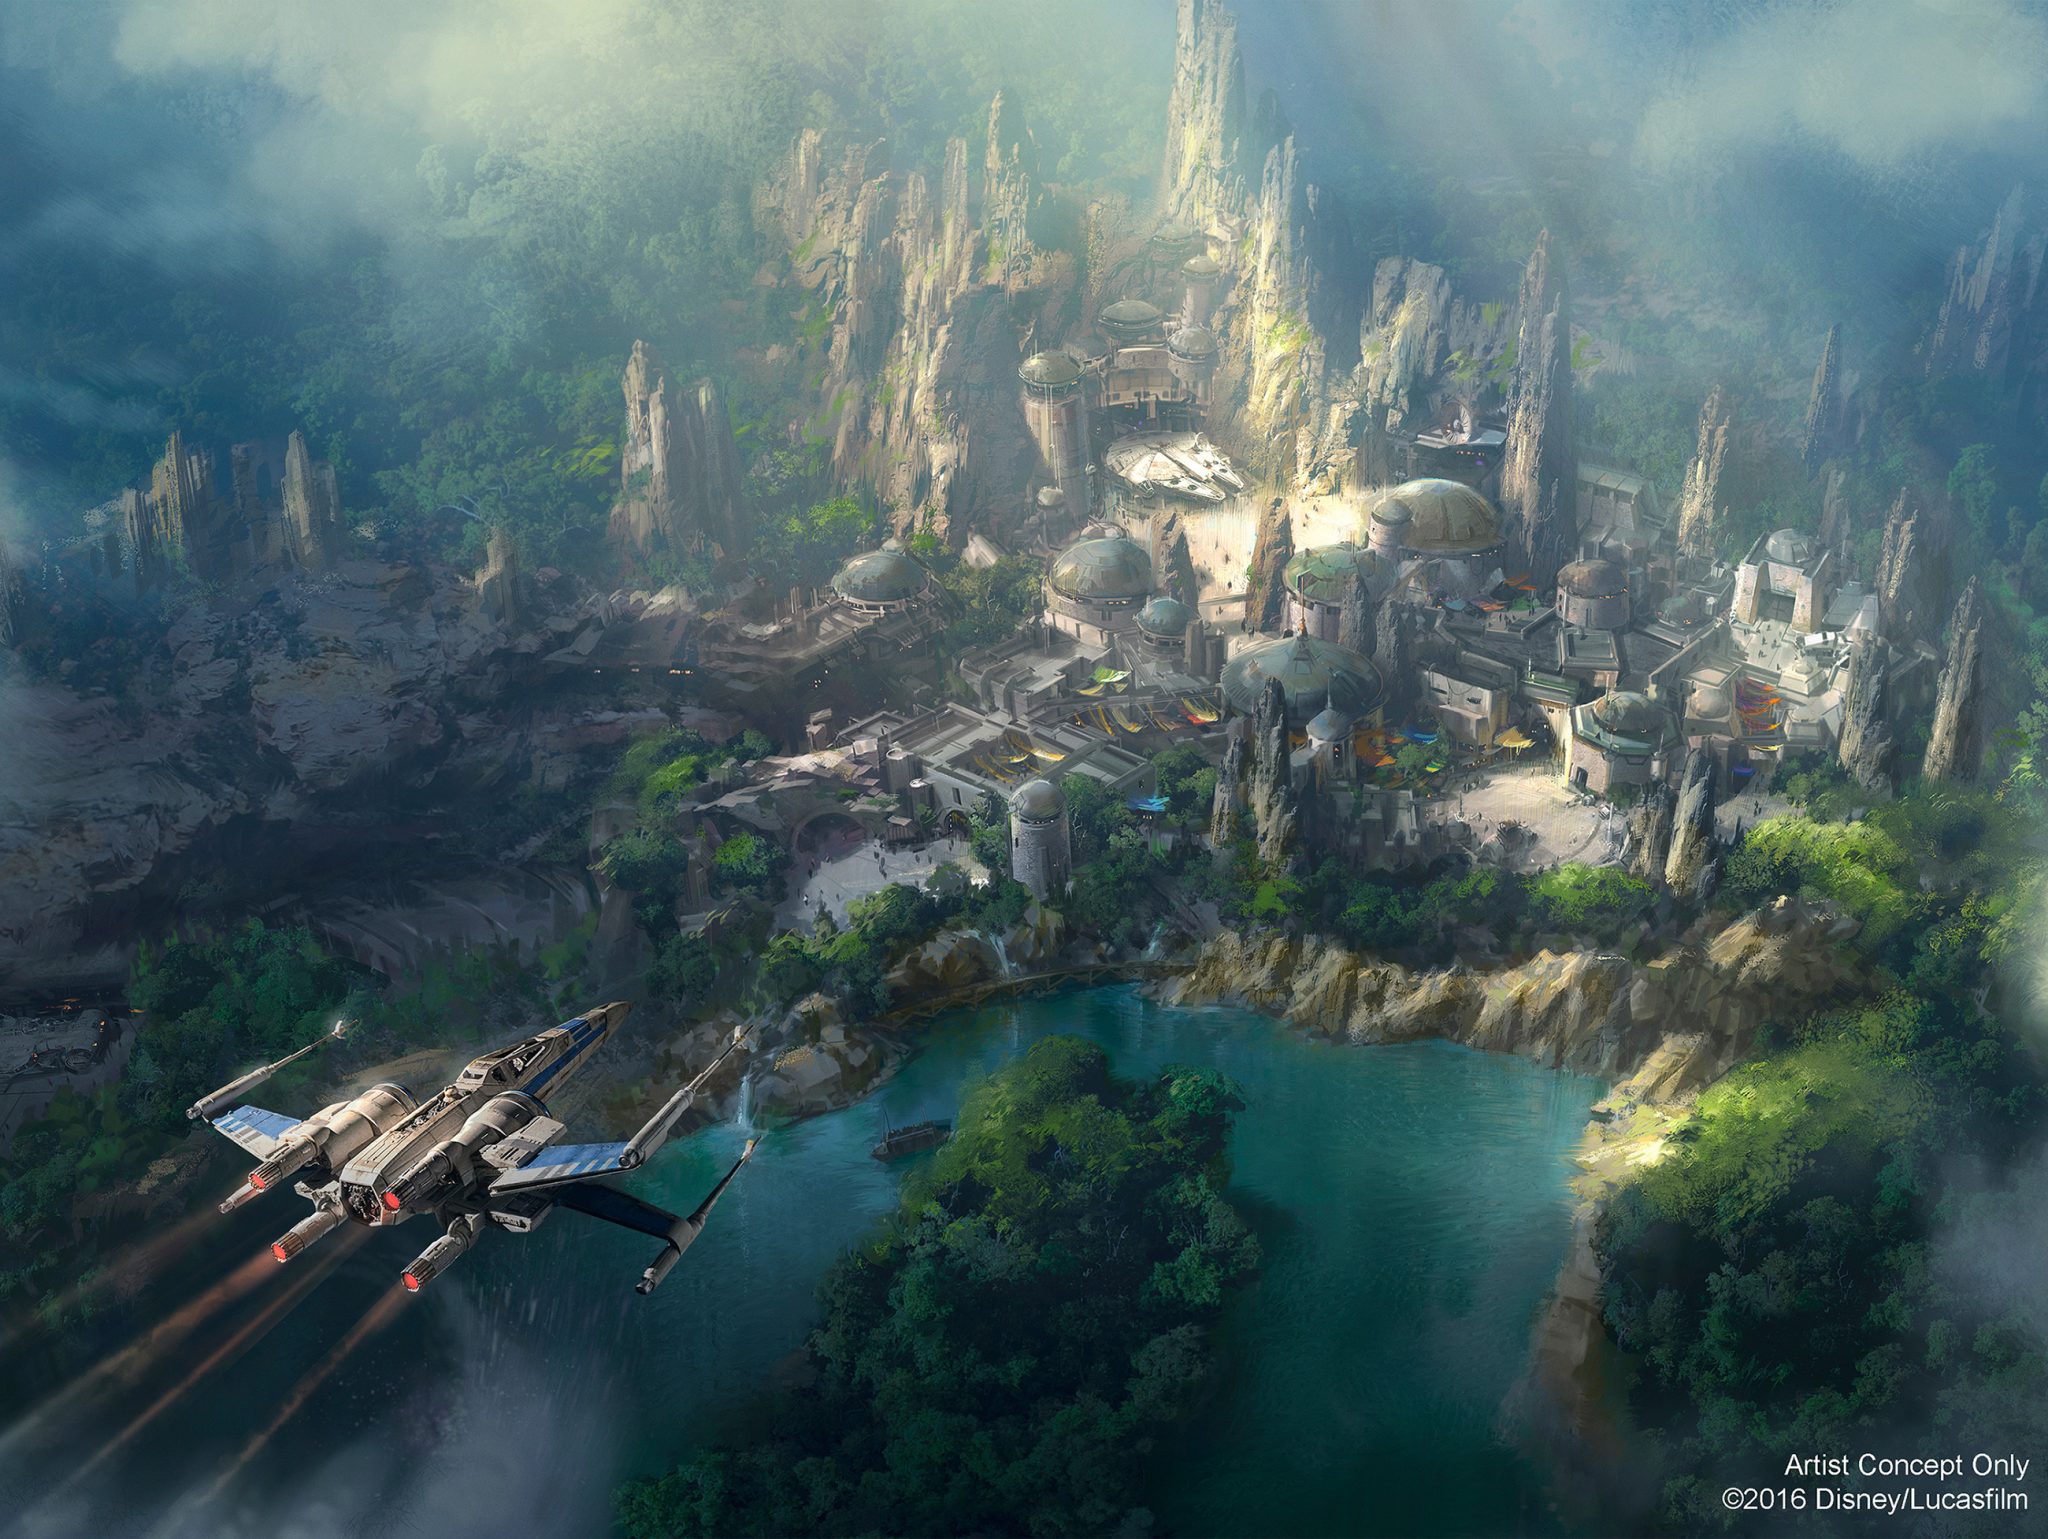 Disneyland Reveals New Star Wars Themed Land Concept Art